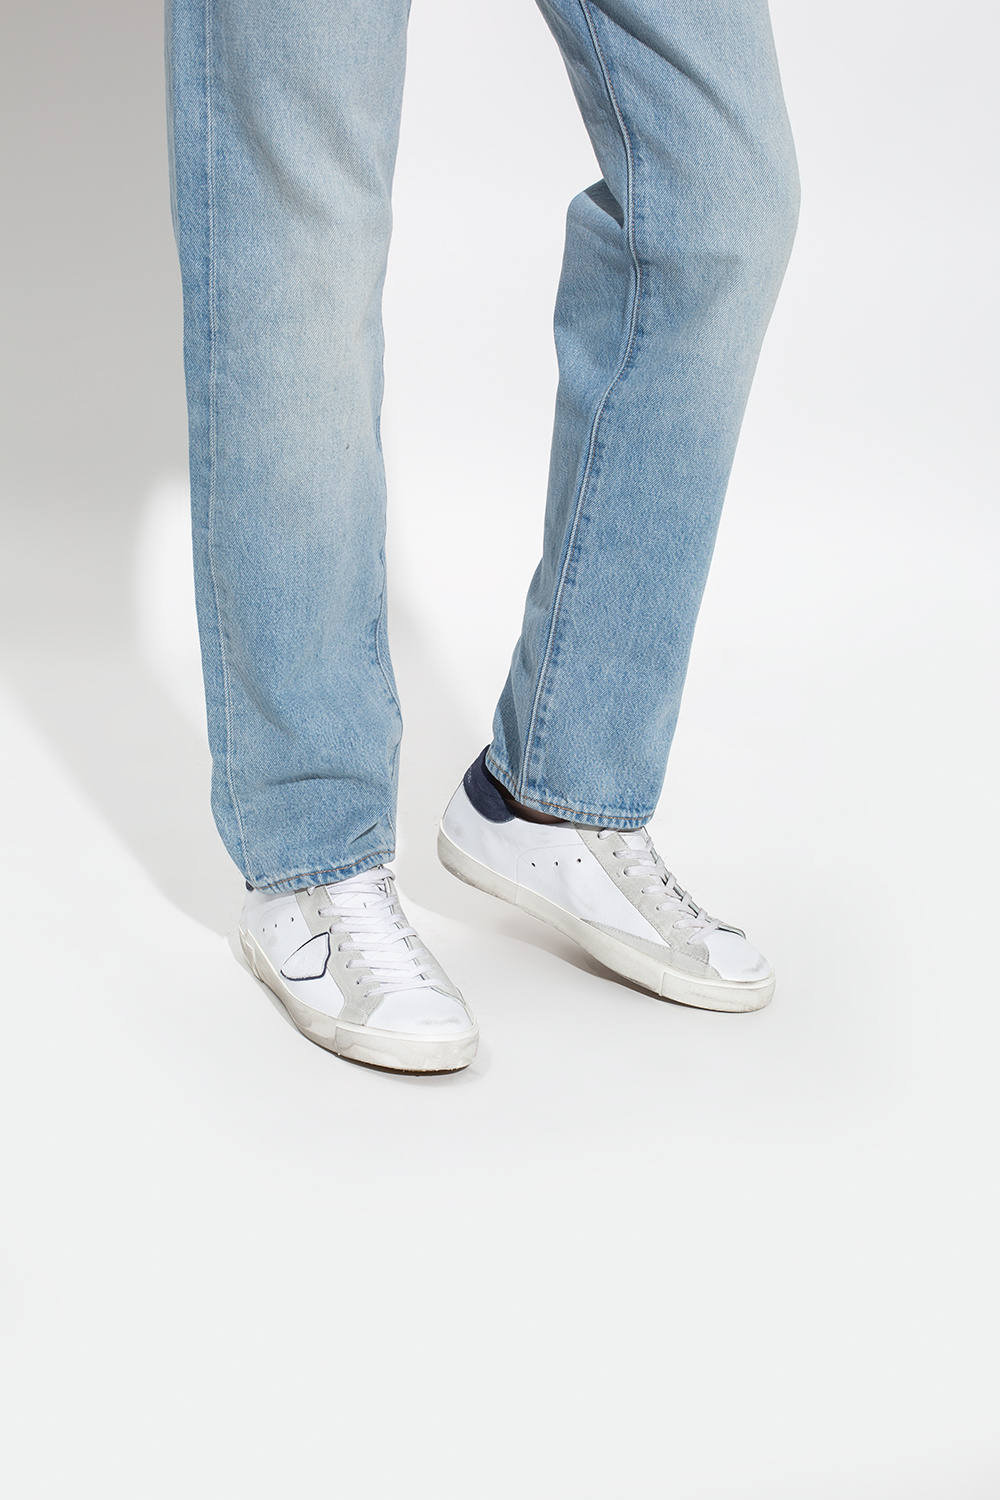 TROPEZ 2.1 Woman: Low White Sneakers | Philippe Model Paris